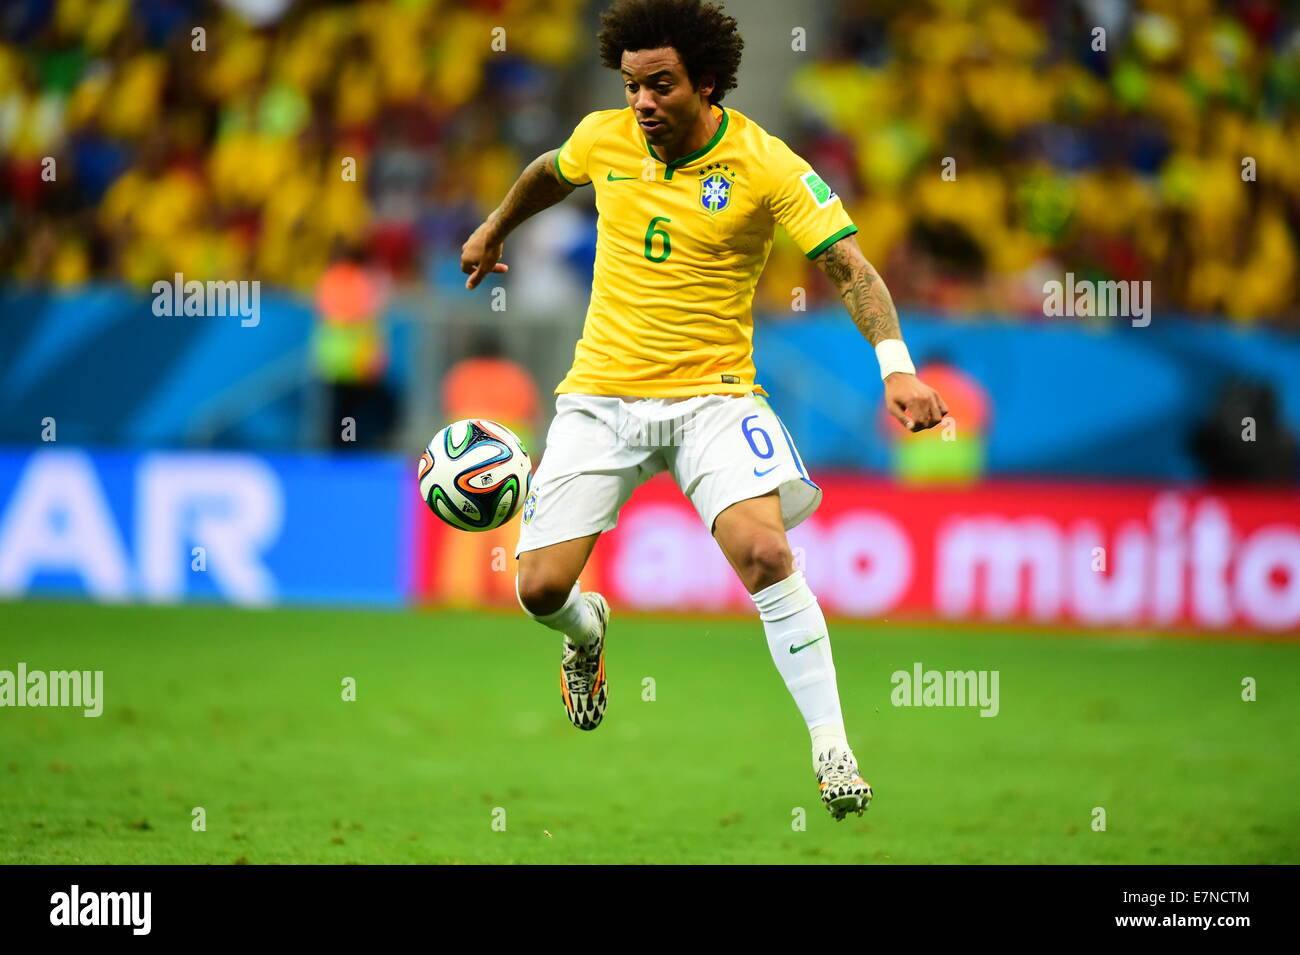 Marcelo. Brazil v Cameroon, group match. FIFA World Cup Brazil 2014. National stadium, Brasilia. 23 June 2014 Stock Photo